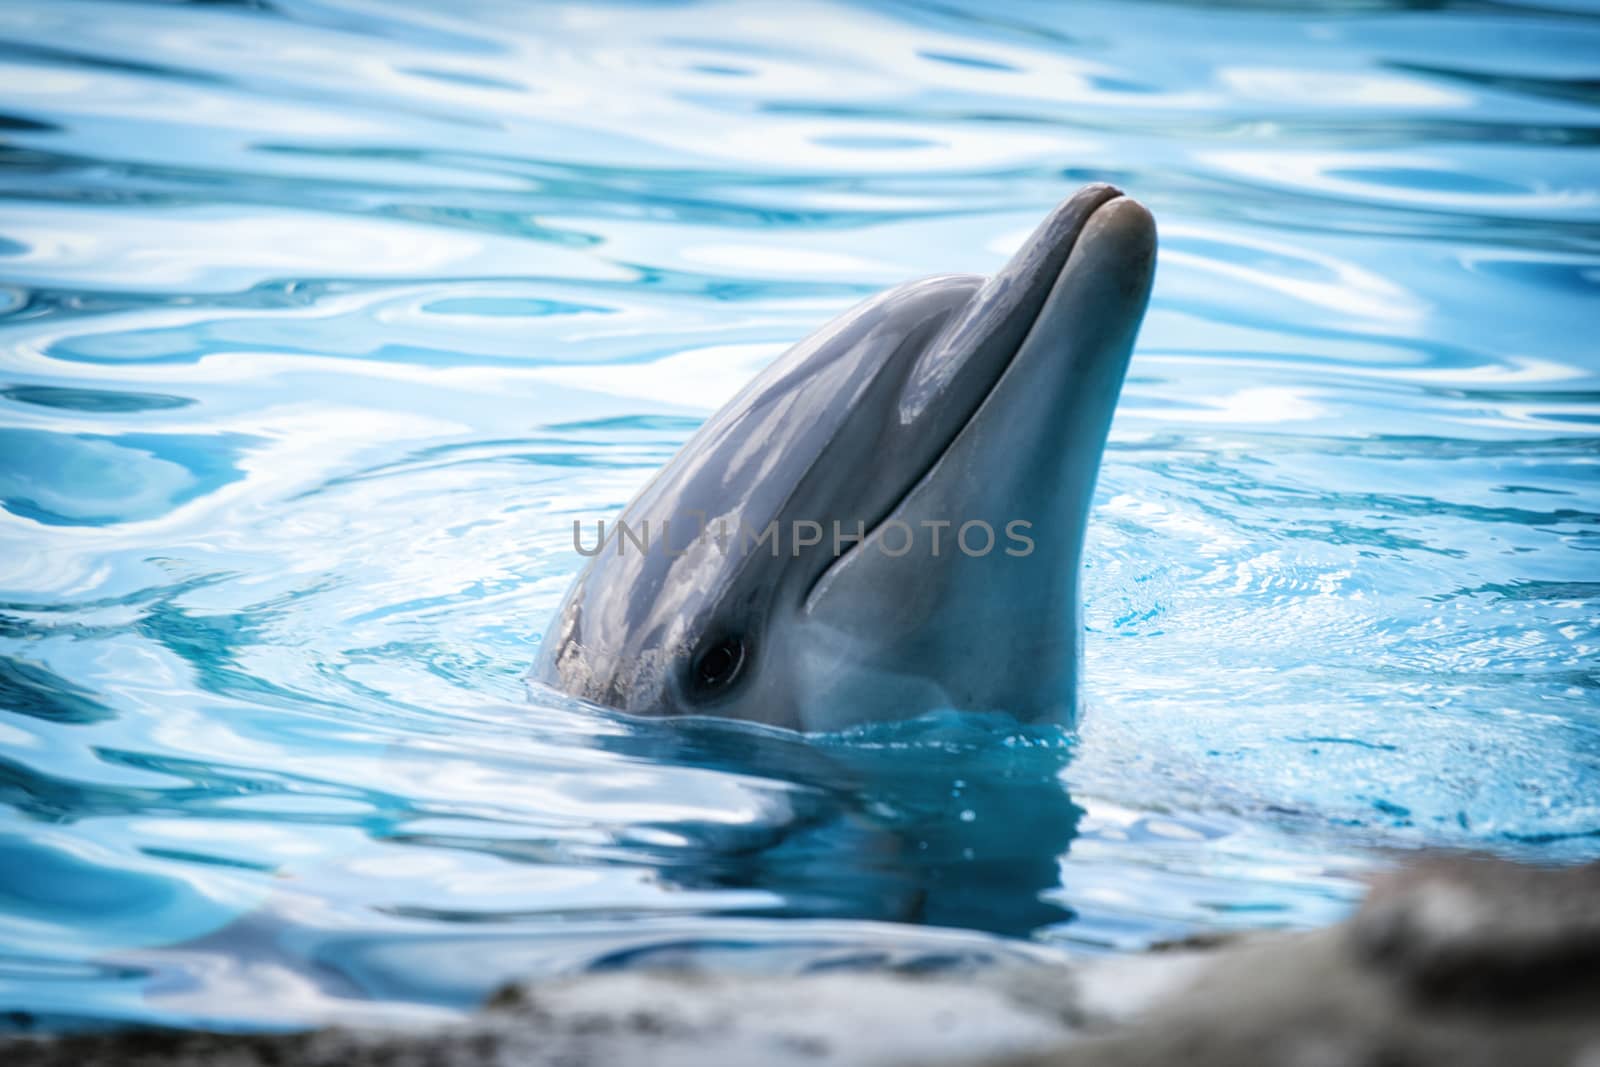 Beautifu smiling dolphin in a swimming pool